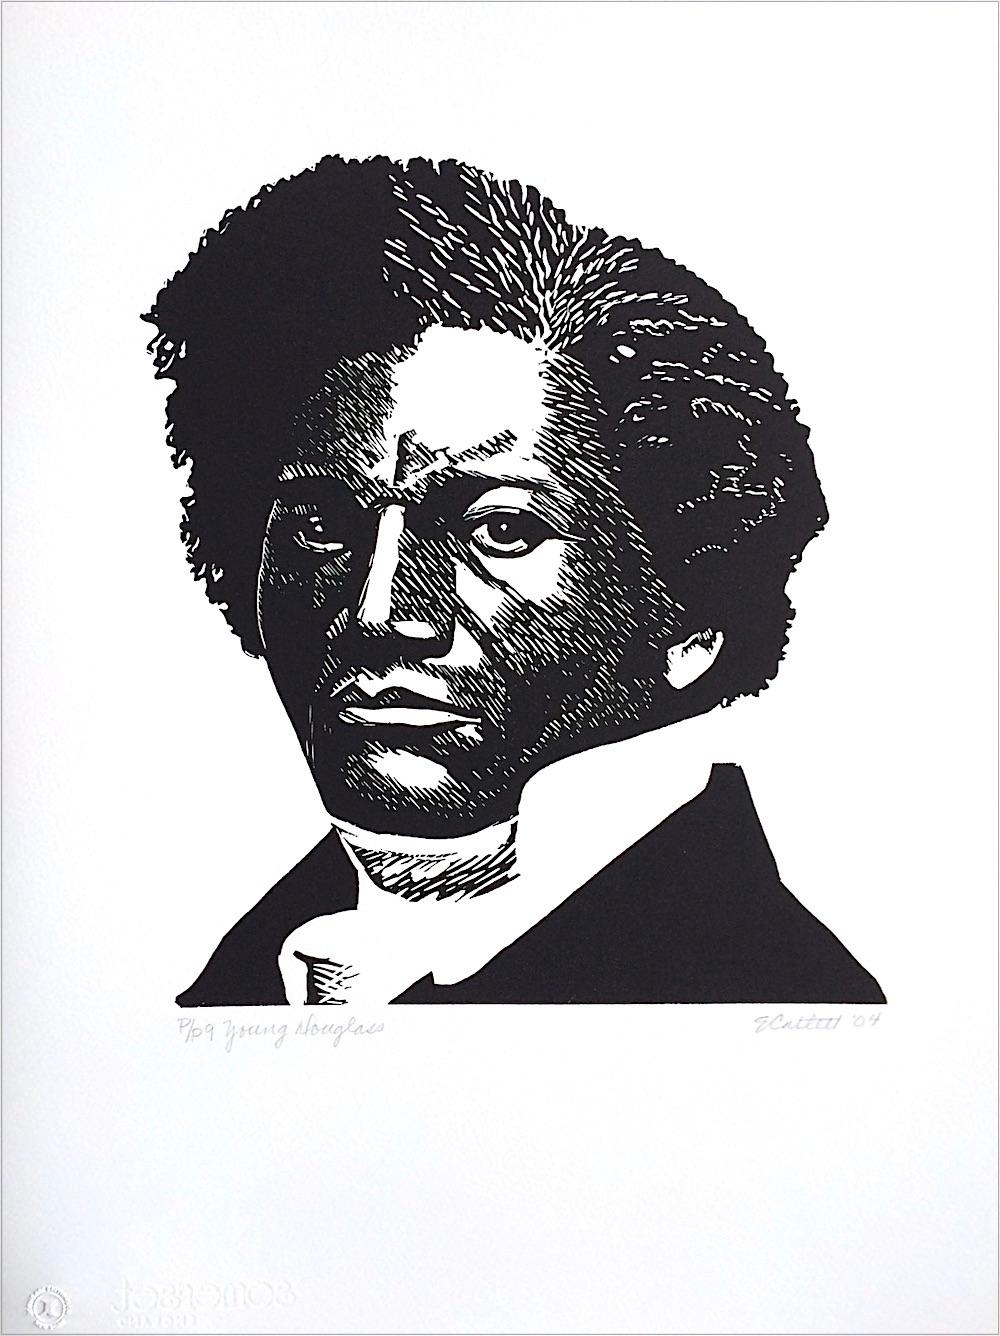 Elizabeth Catlett Figurative Print - YOUNG DOUGLASS Signed Linocut, Black Portrait Head African American Civil Rights